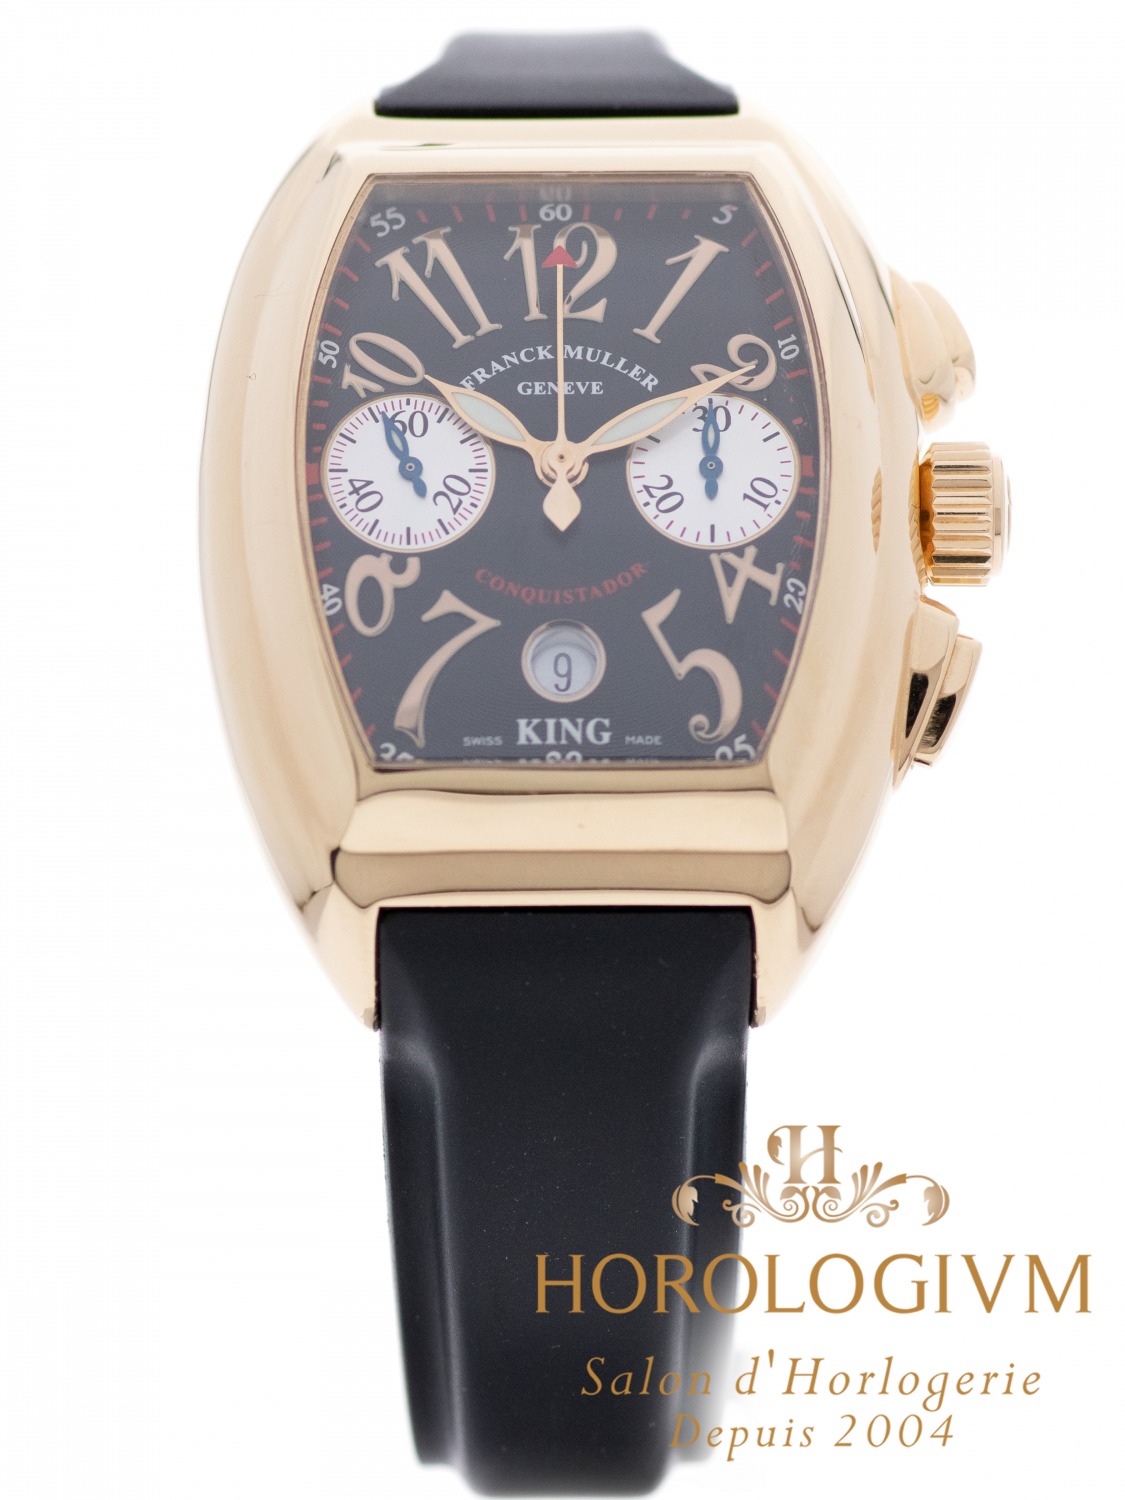 Franck Muller King Conquistador 8005 CC KING watch, yellow gold